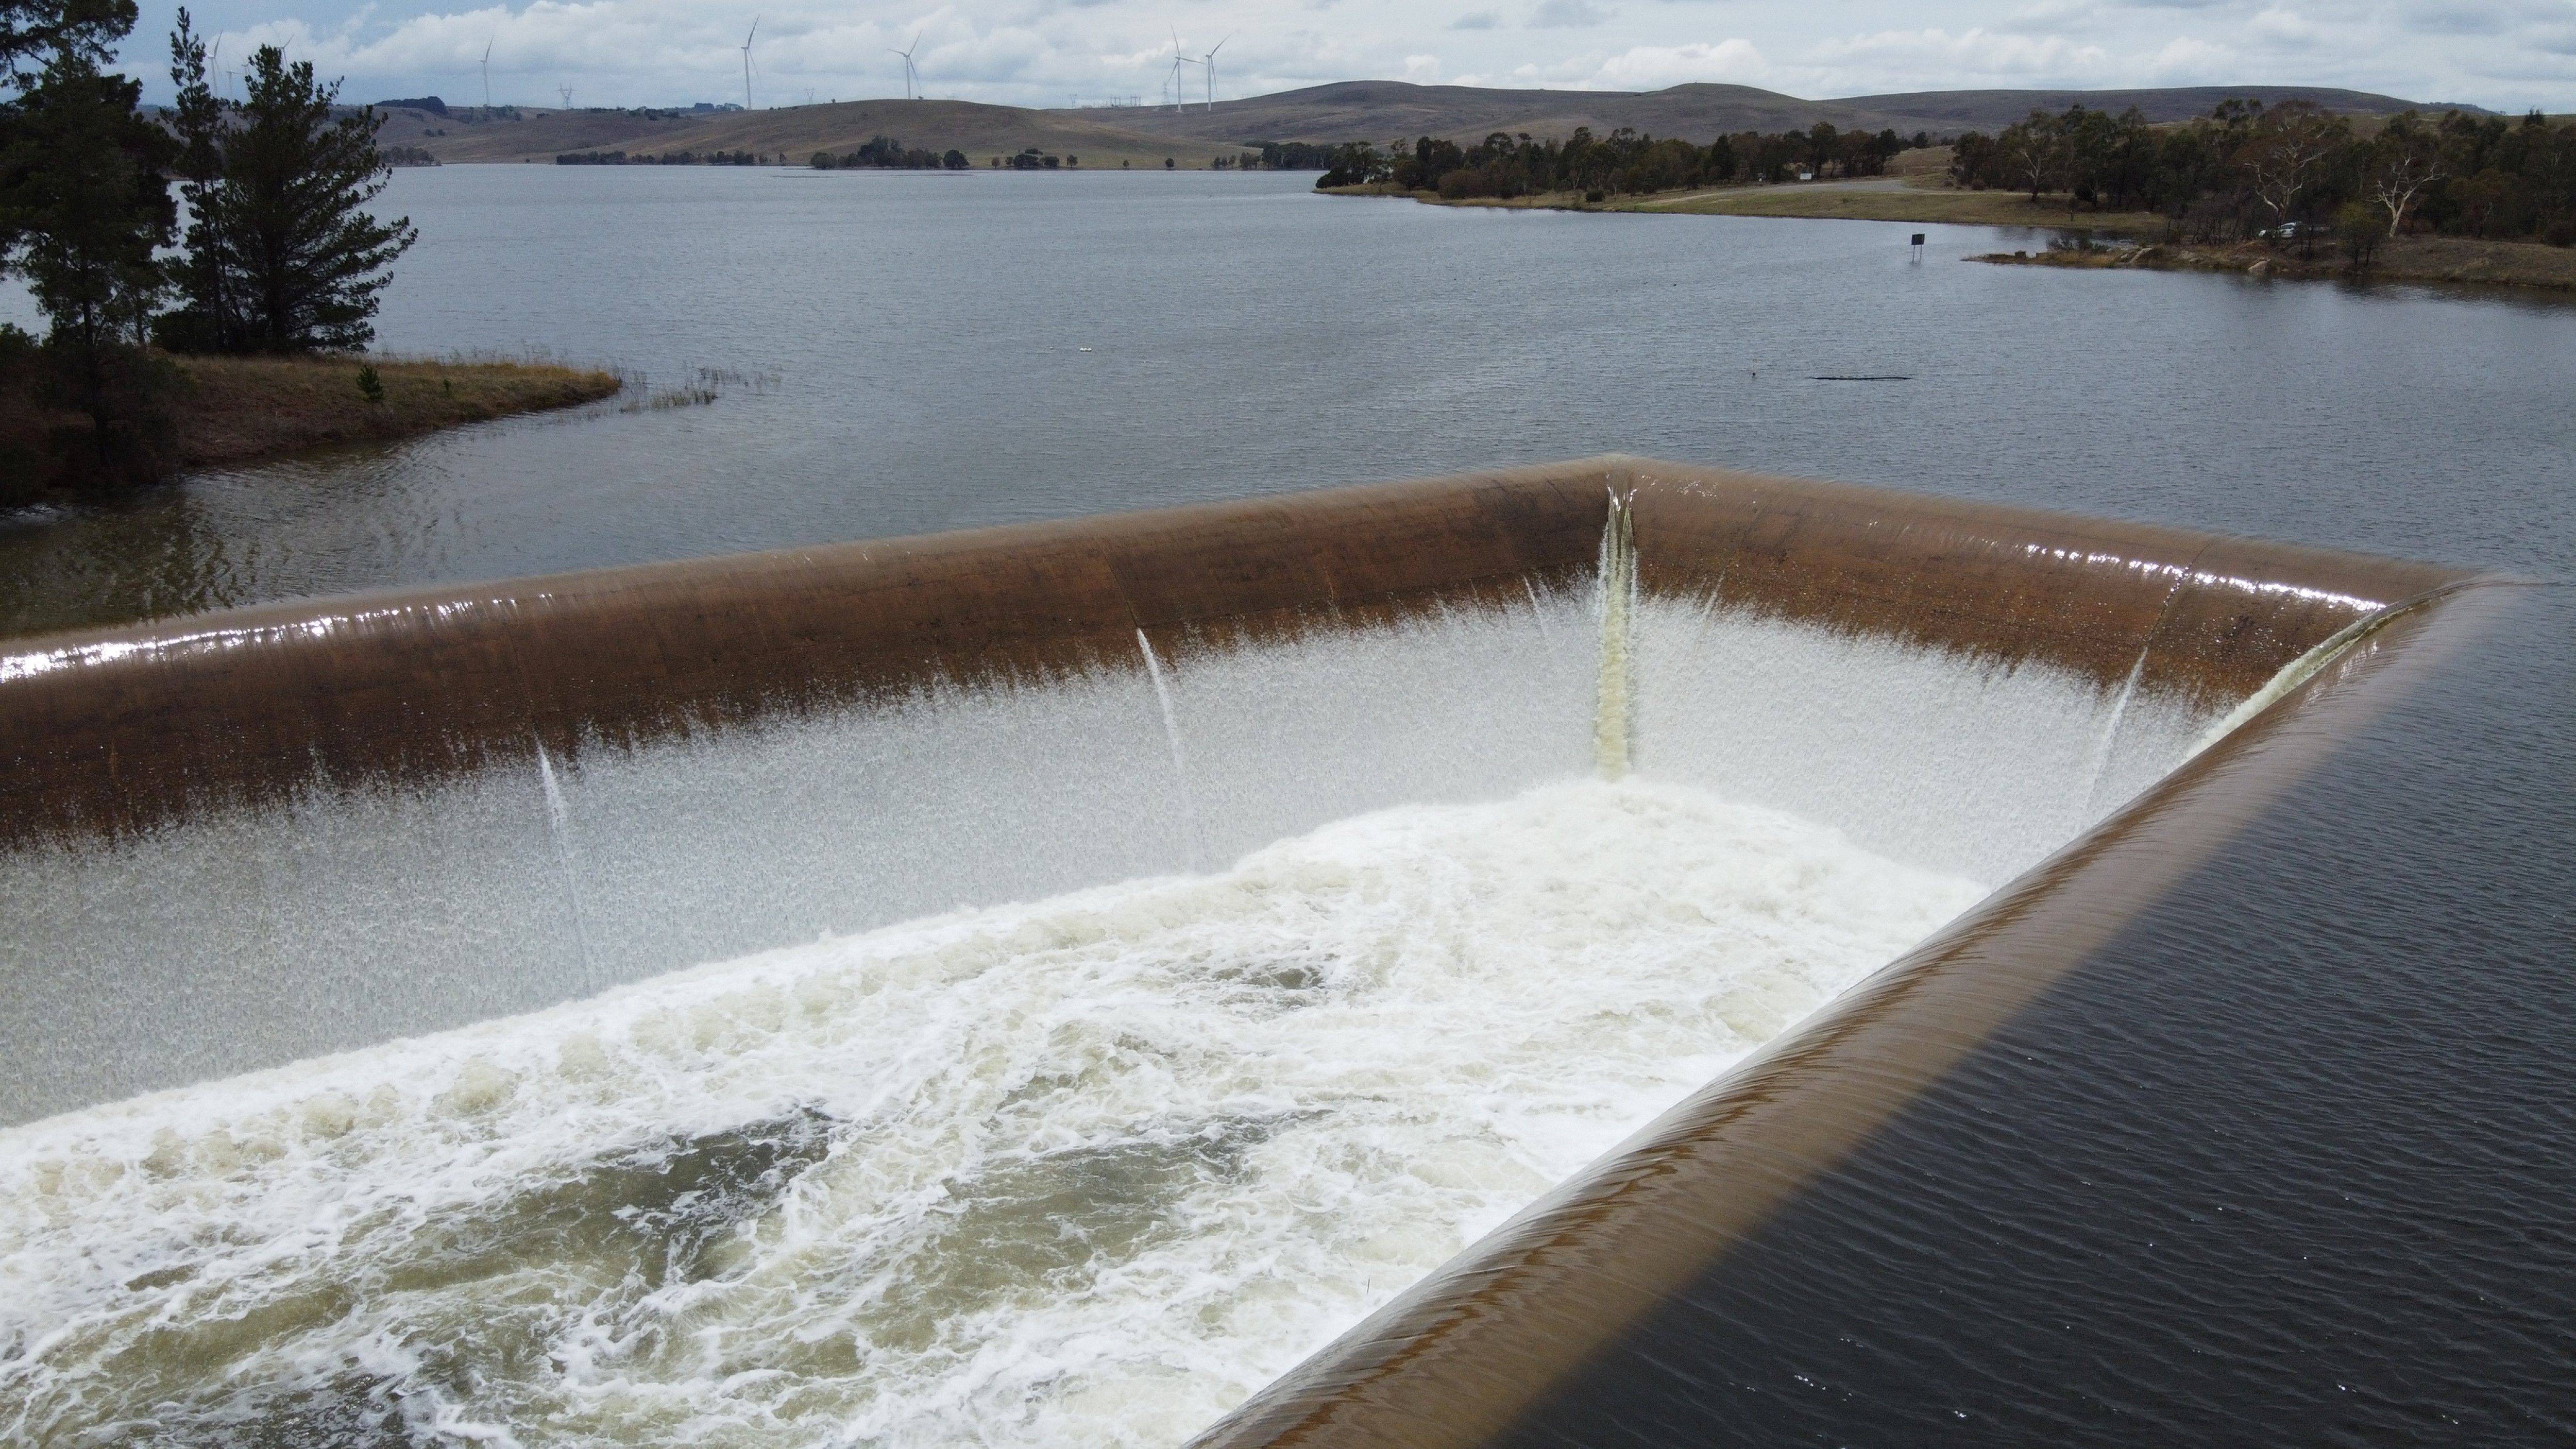 Goulburn Mulwaree Council closes Pejar Dam due to toxic algae bloom